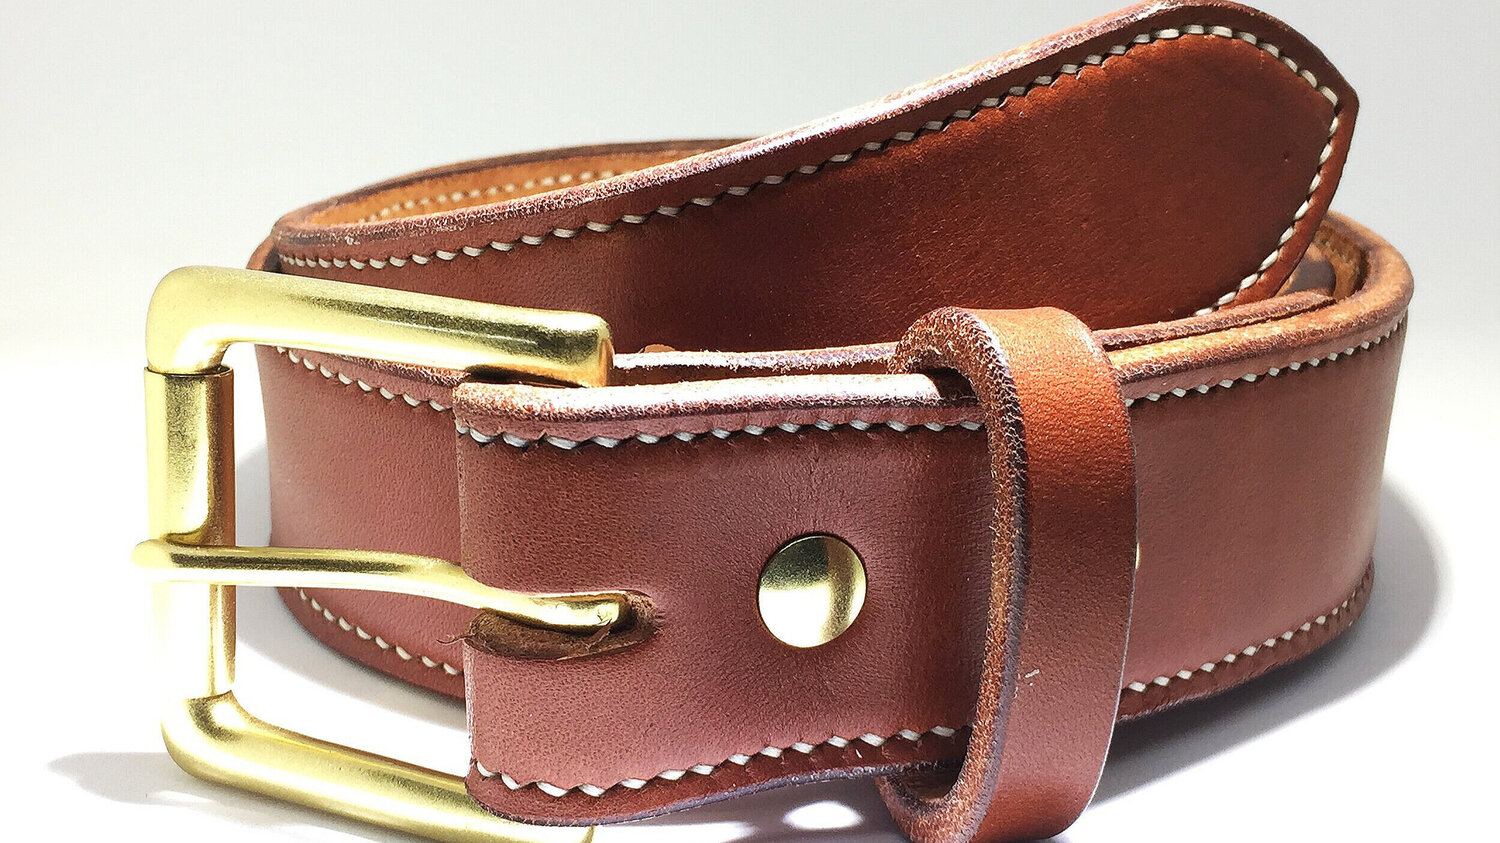 Buy Handmade Leather Belt in Orange 32 Mm 1.25 or 40 Mm Online in India 